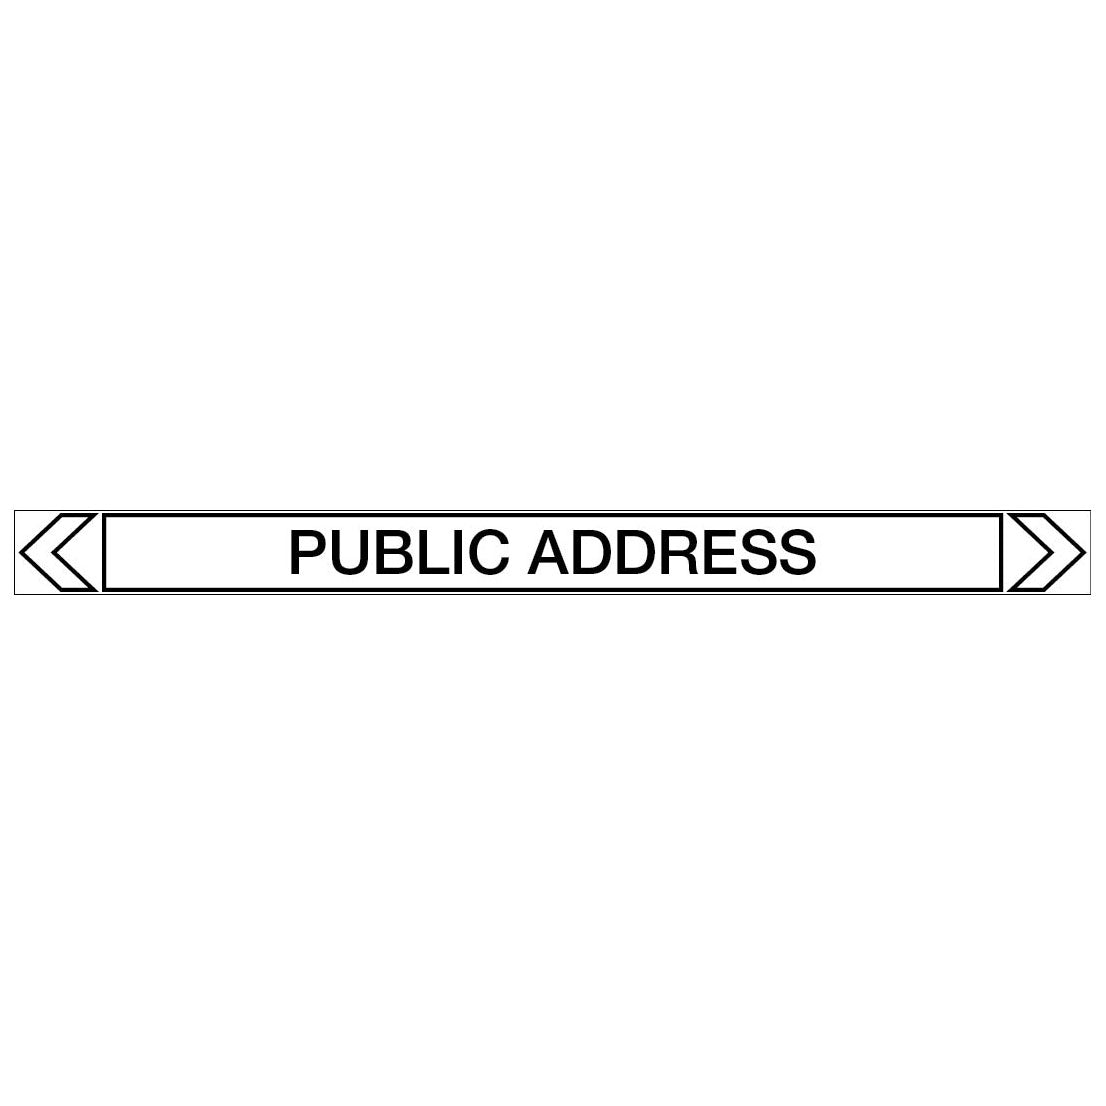 Communications - Public Address - Pipe Marker Sticker